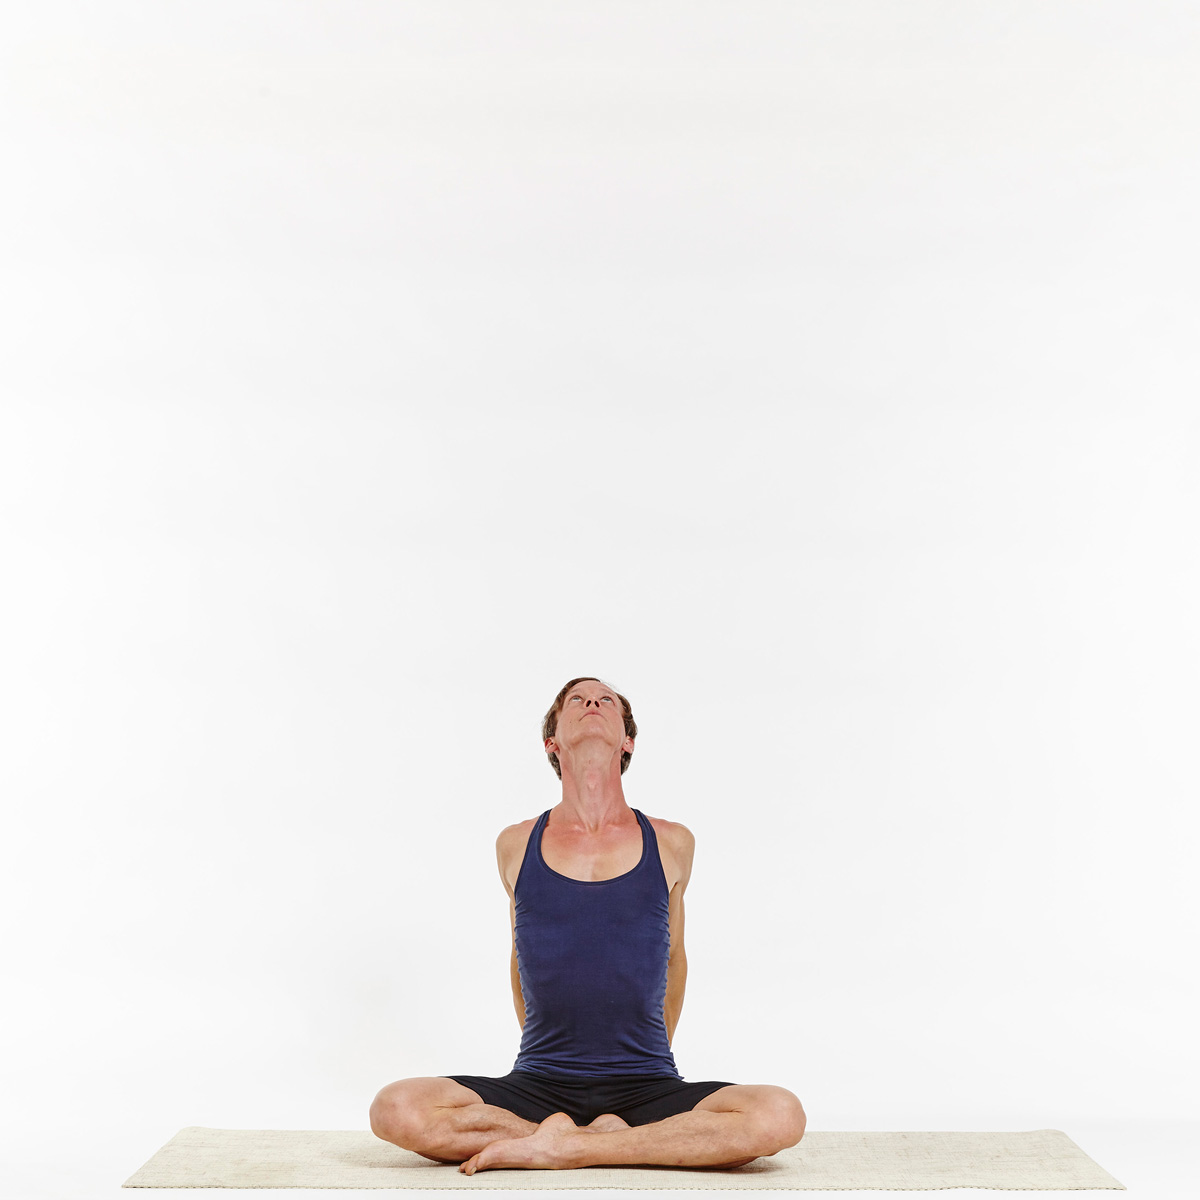 Sitting cross legged (sukhasana) problem : r/flexibility